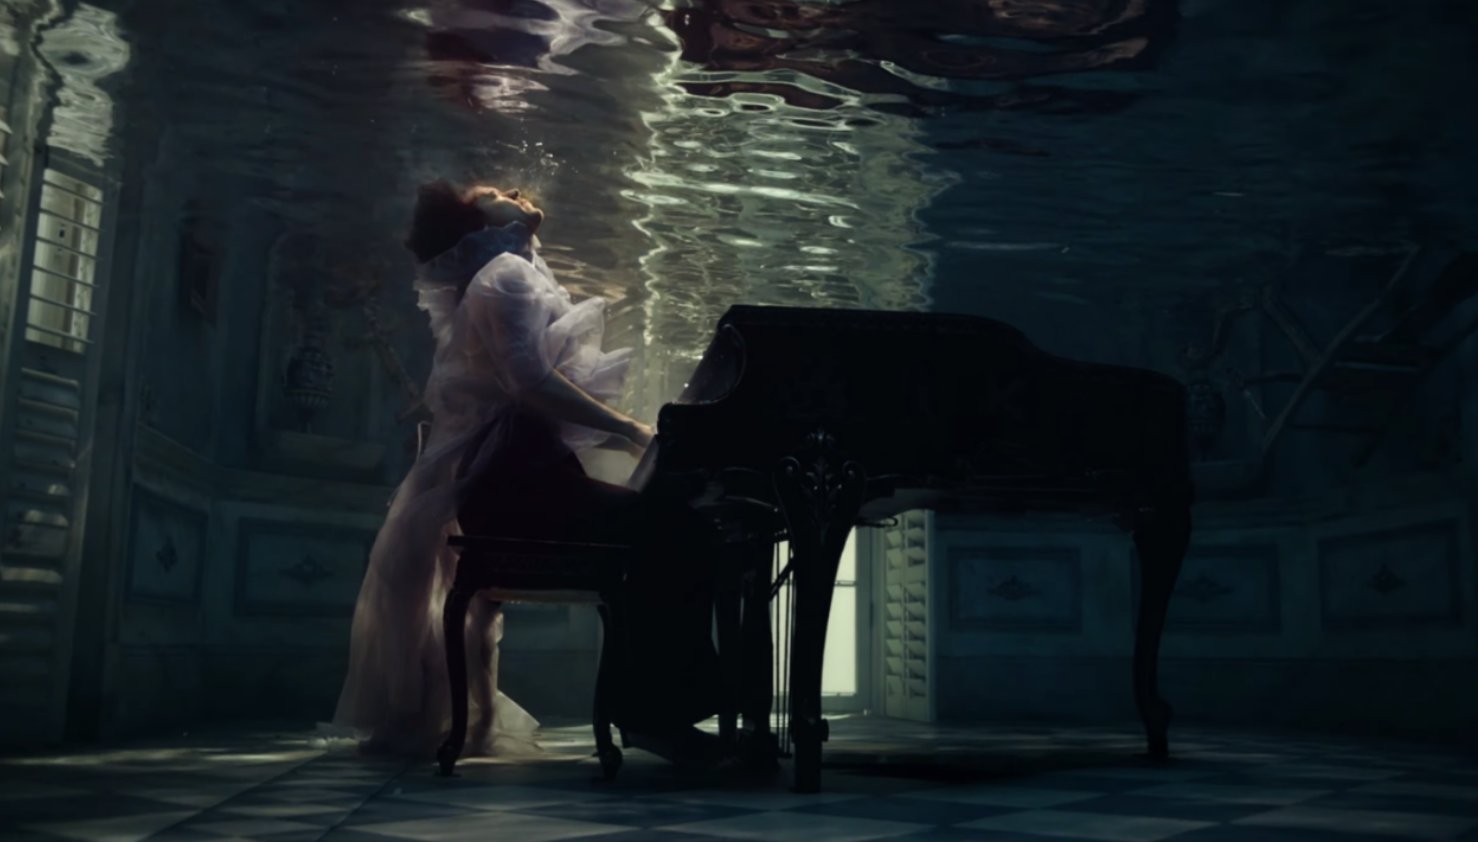 Subdividir whisky insondable Rolling Stone en Español - México on Twitter: "Harry Styles toca el piano  bajo el agua en el video de "Falling". Míralo aquí: https://t.co/j3cARrfbz0  https://t.co/U34kEhz1uN" / Twitter